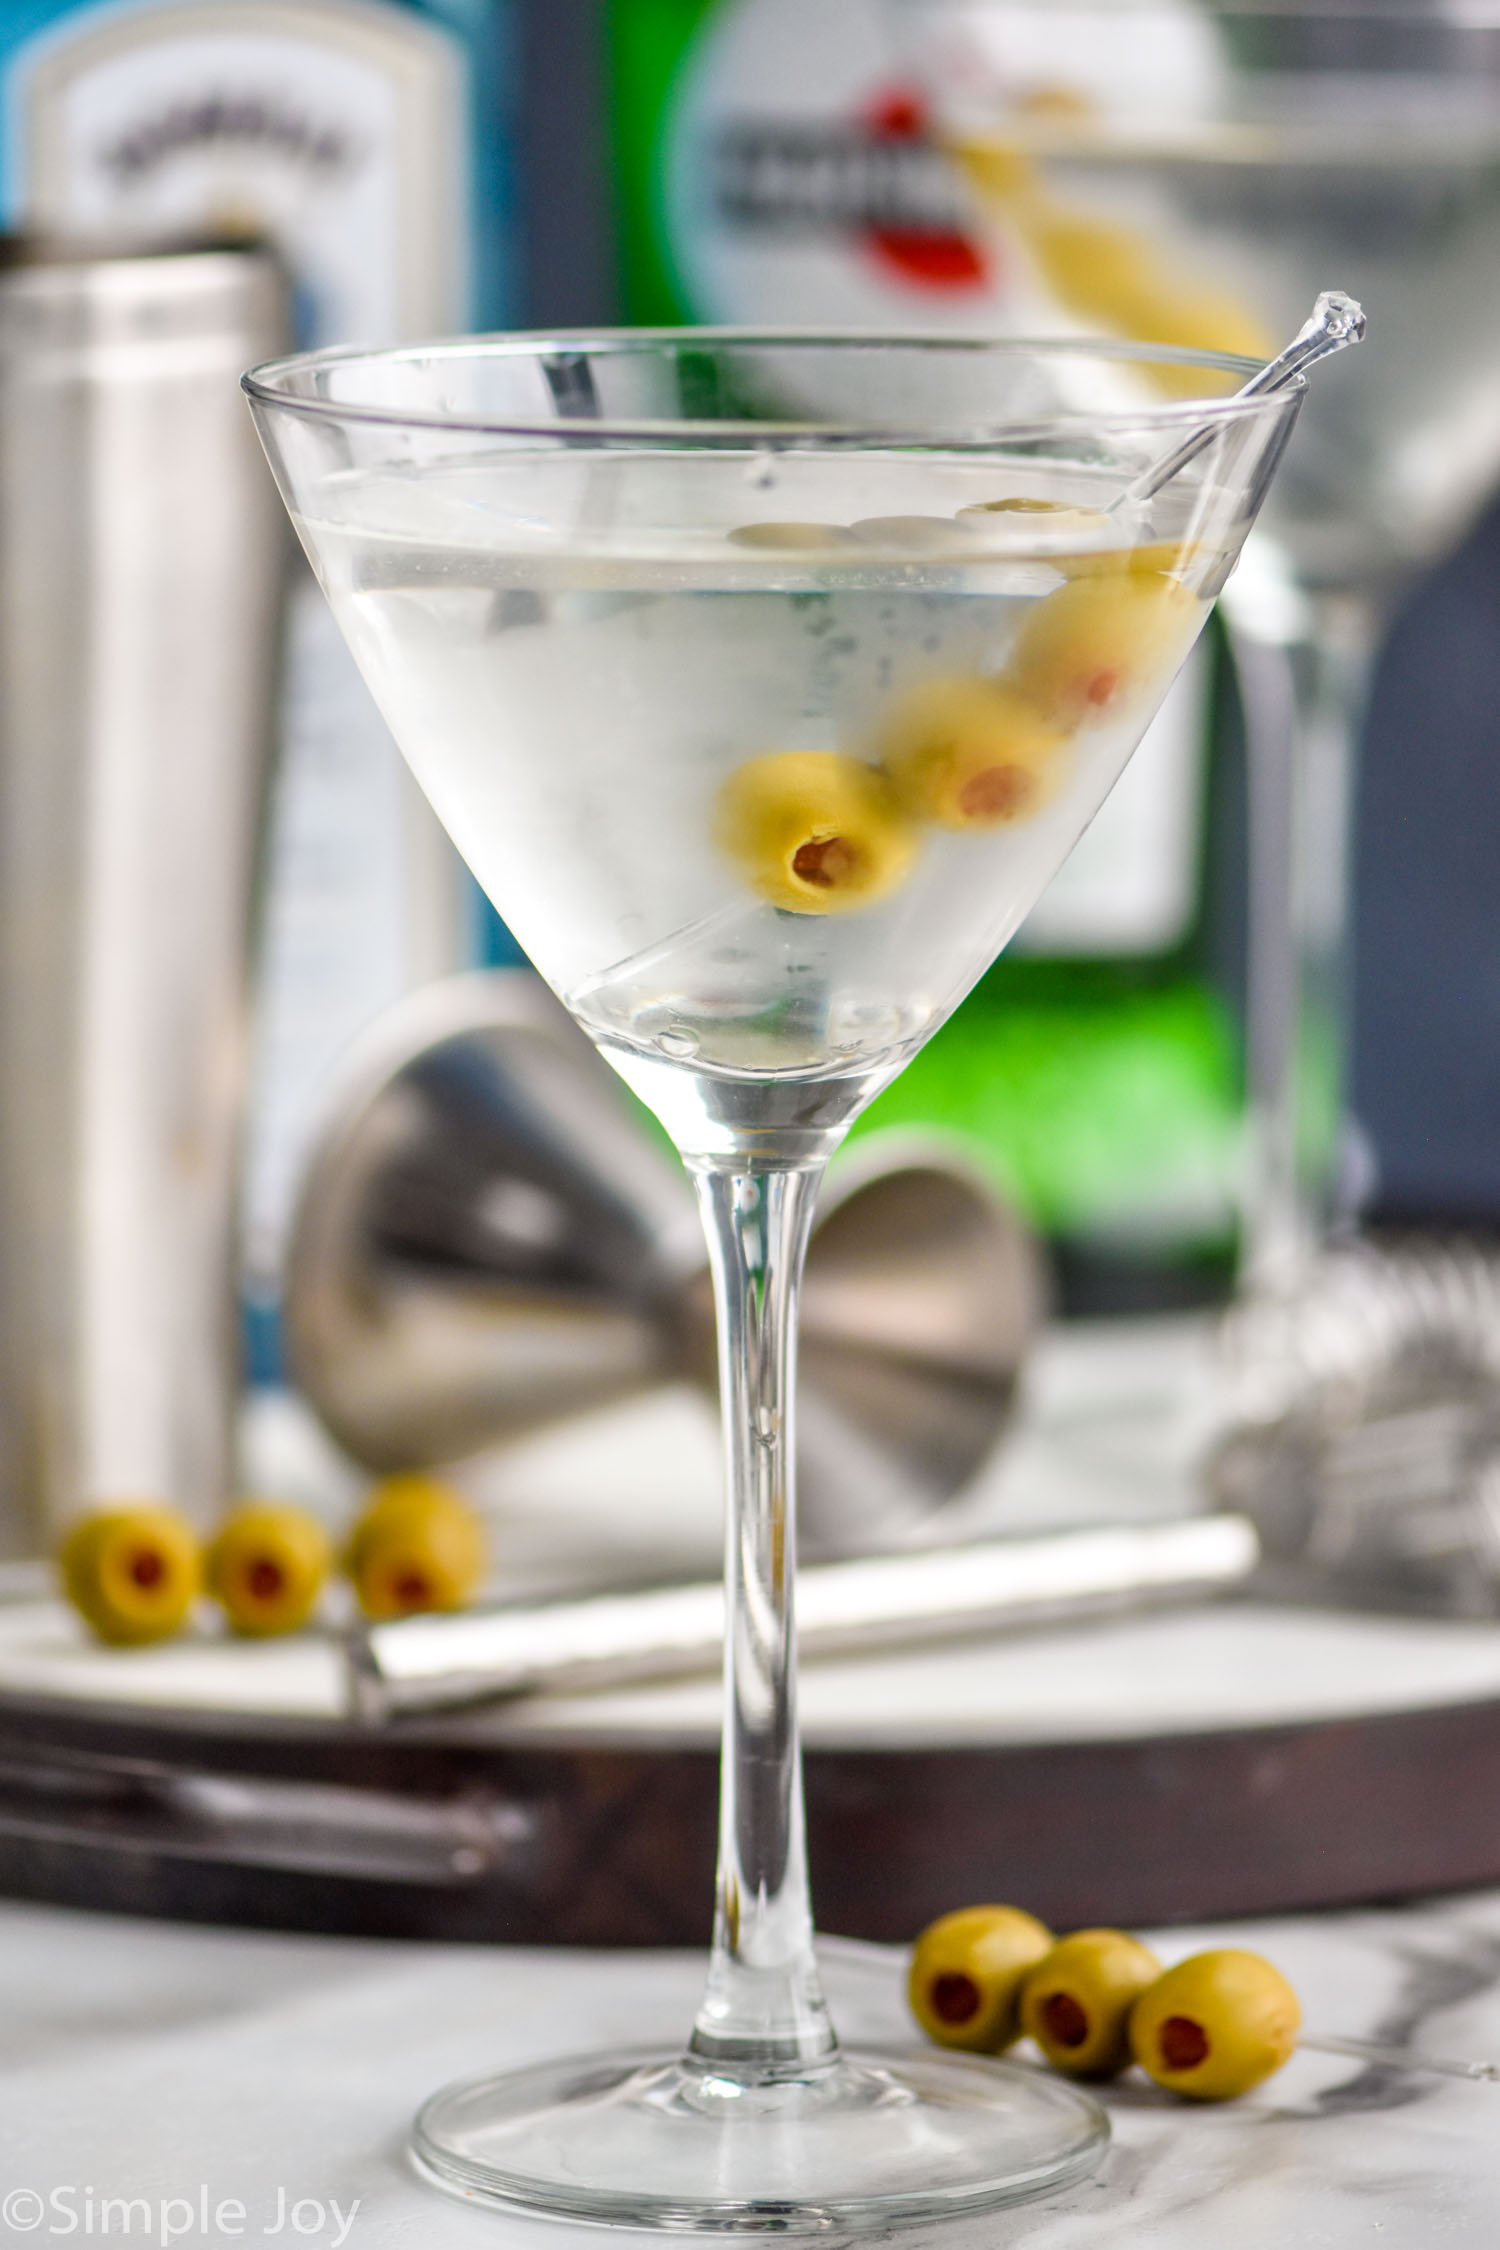 https://www.simplejoy.com/wp-content/uploads/2020/01/gin-martini-recipe.jpg